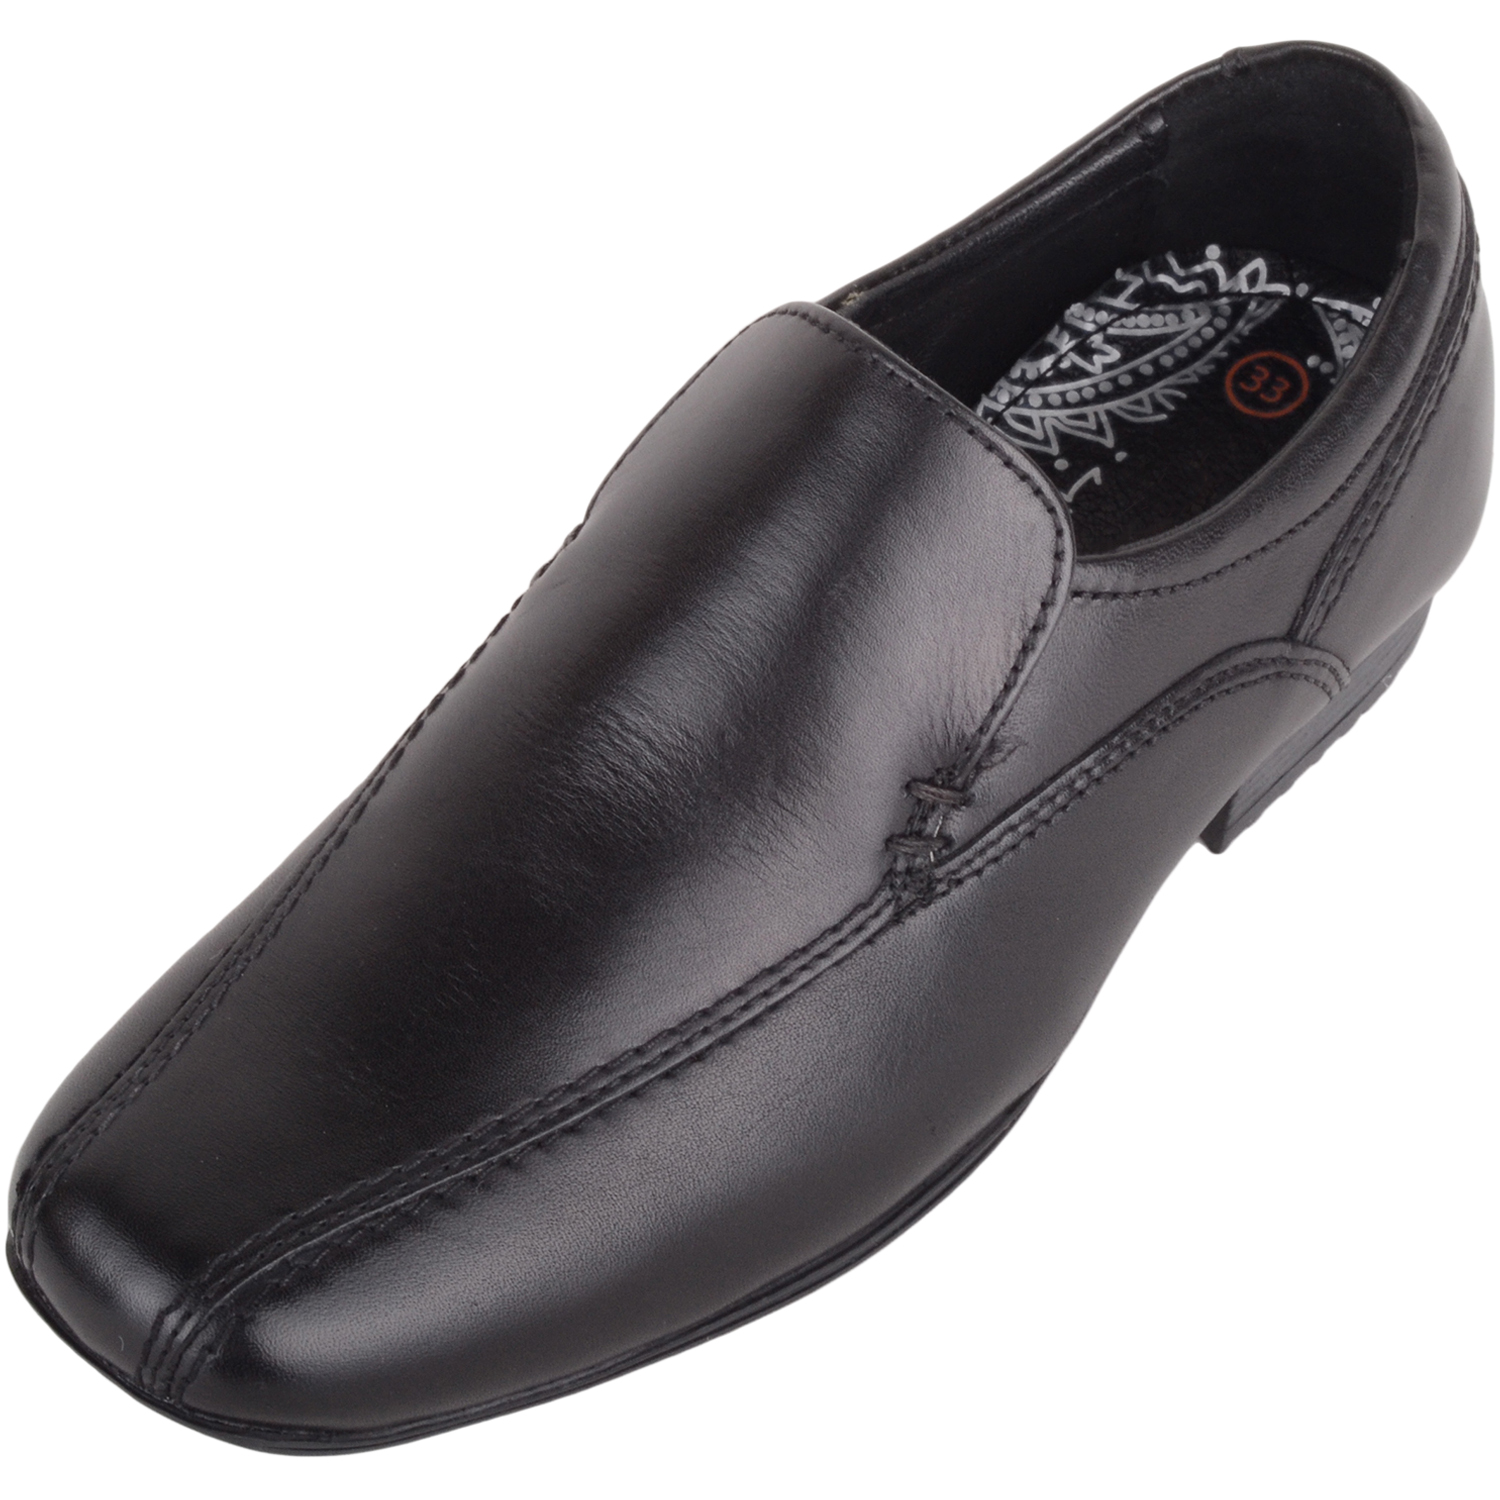 Childrens Kids Boys Leather Slip On Smart Formal School Shoes (Color: Black, Size: UK 3) by Absolute Footwear